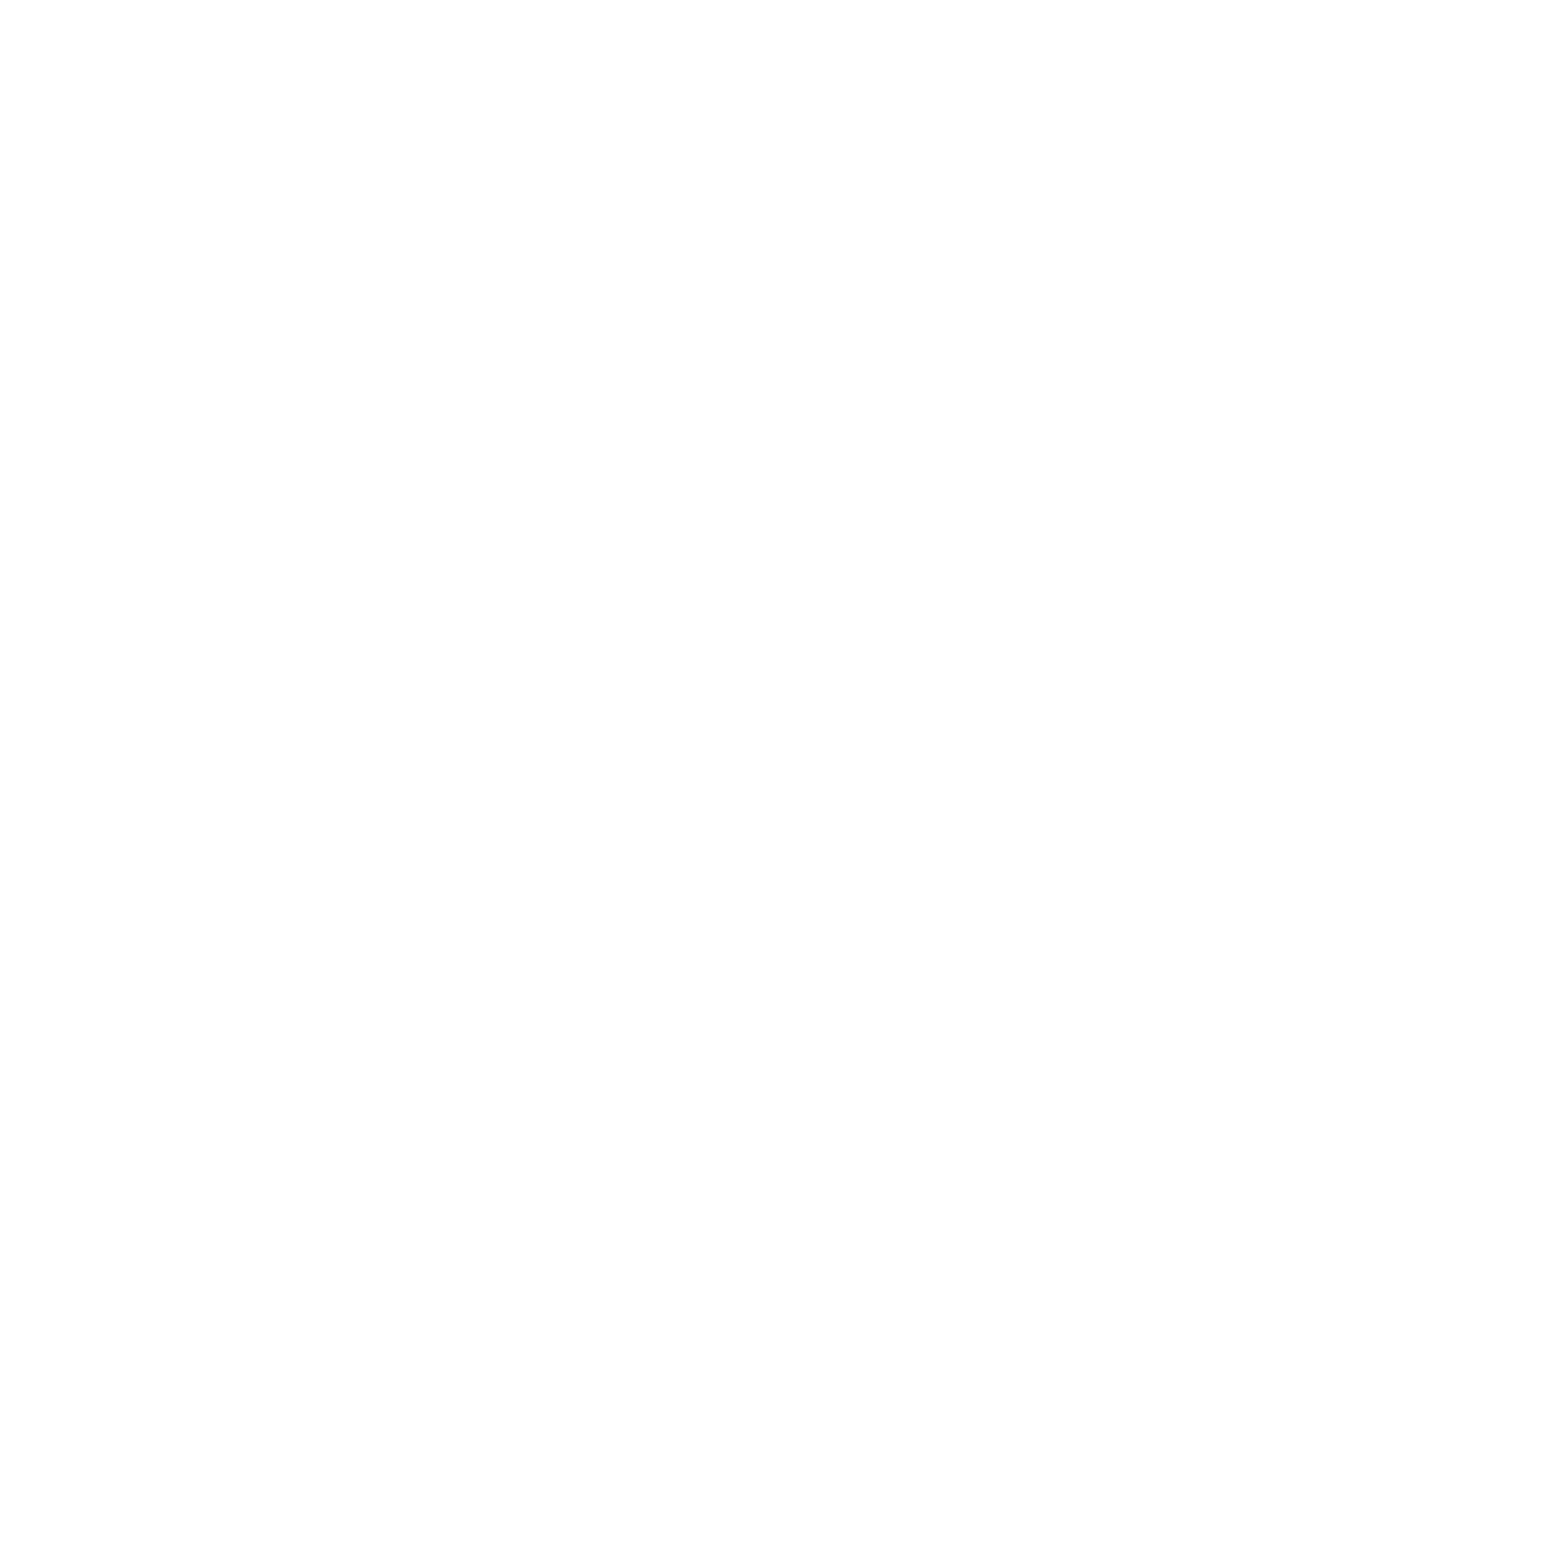 Kaspi.kz Joint Stock Company logo for dark backgrounds (transparent PNG)